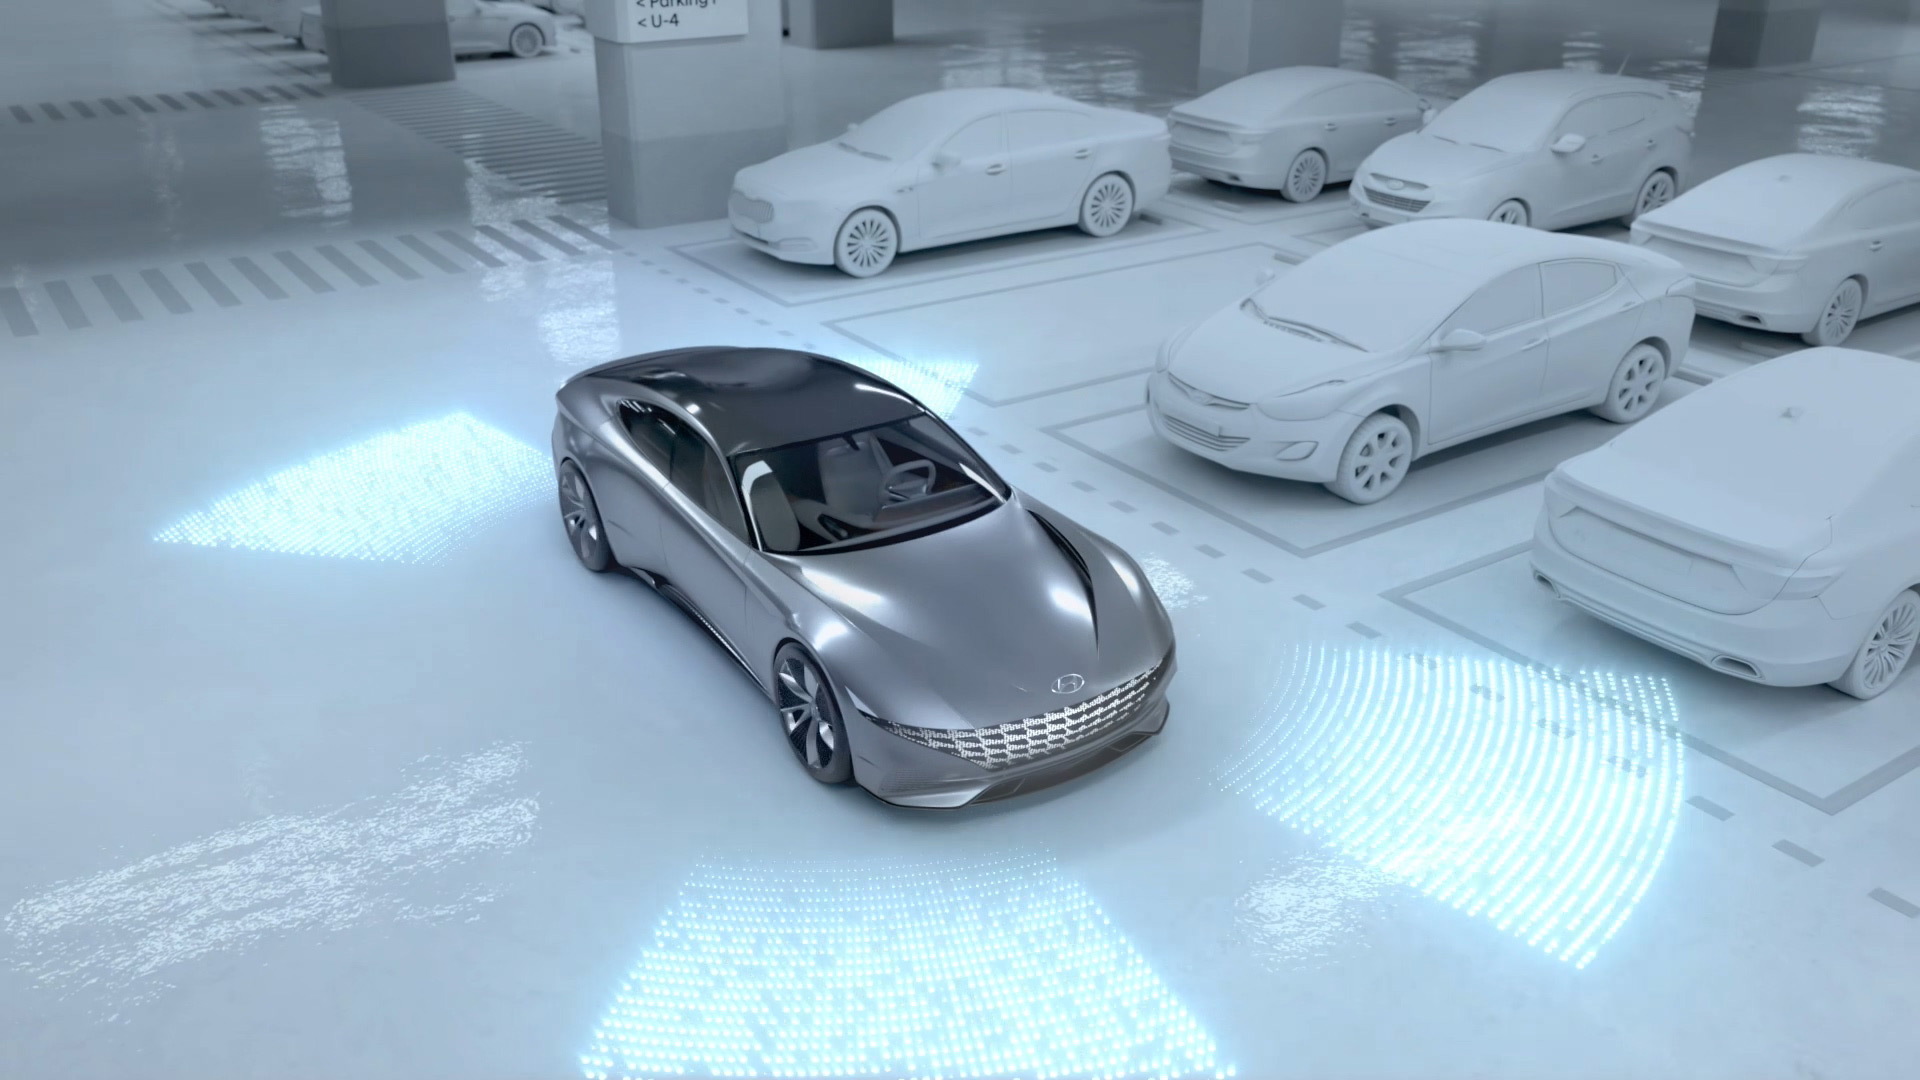 Hyundai and Kia automated valet concept